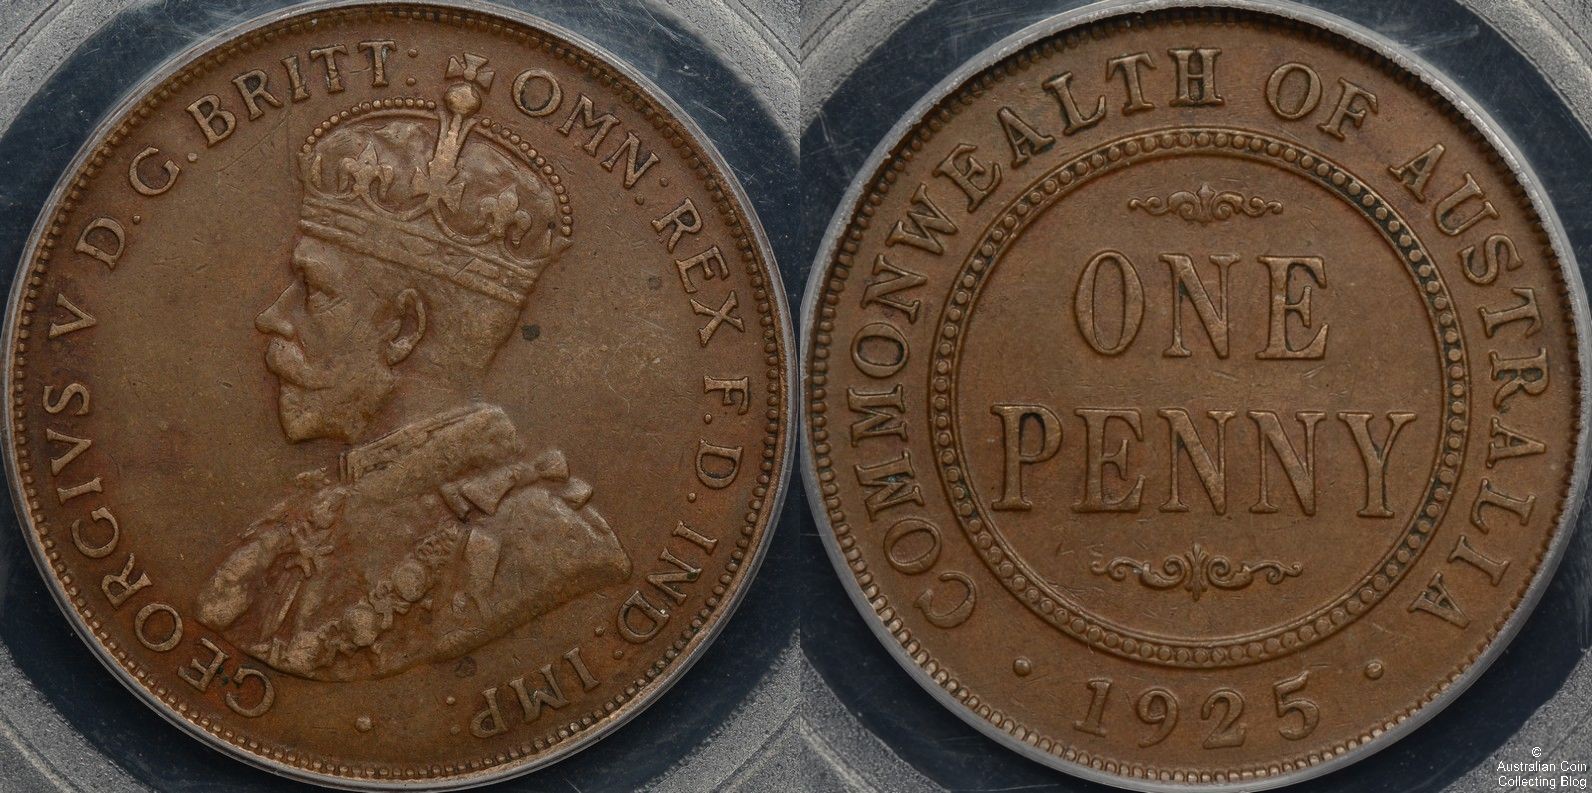 Australia 1925 Penny PCGS XF45